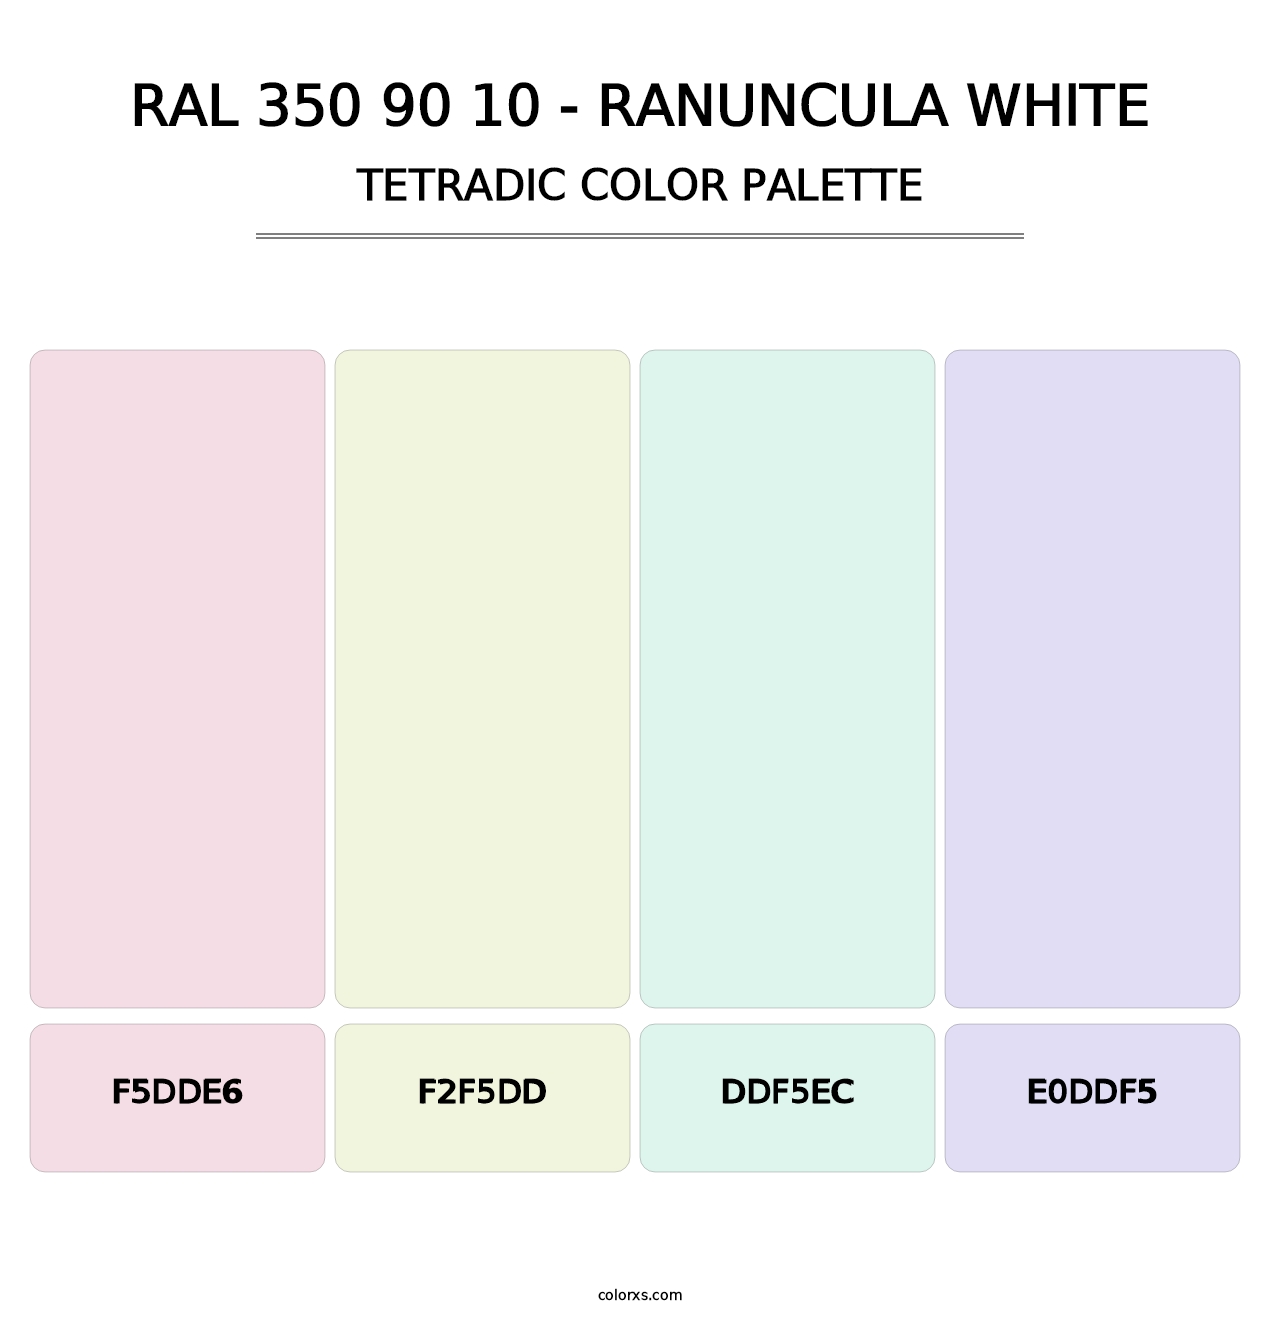 RAL 350 90 10 - Ranuncula White - Tetradic Color Palette